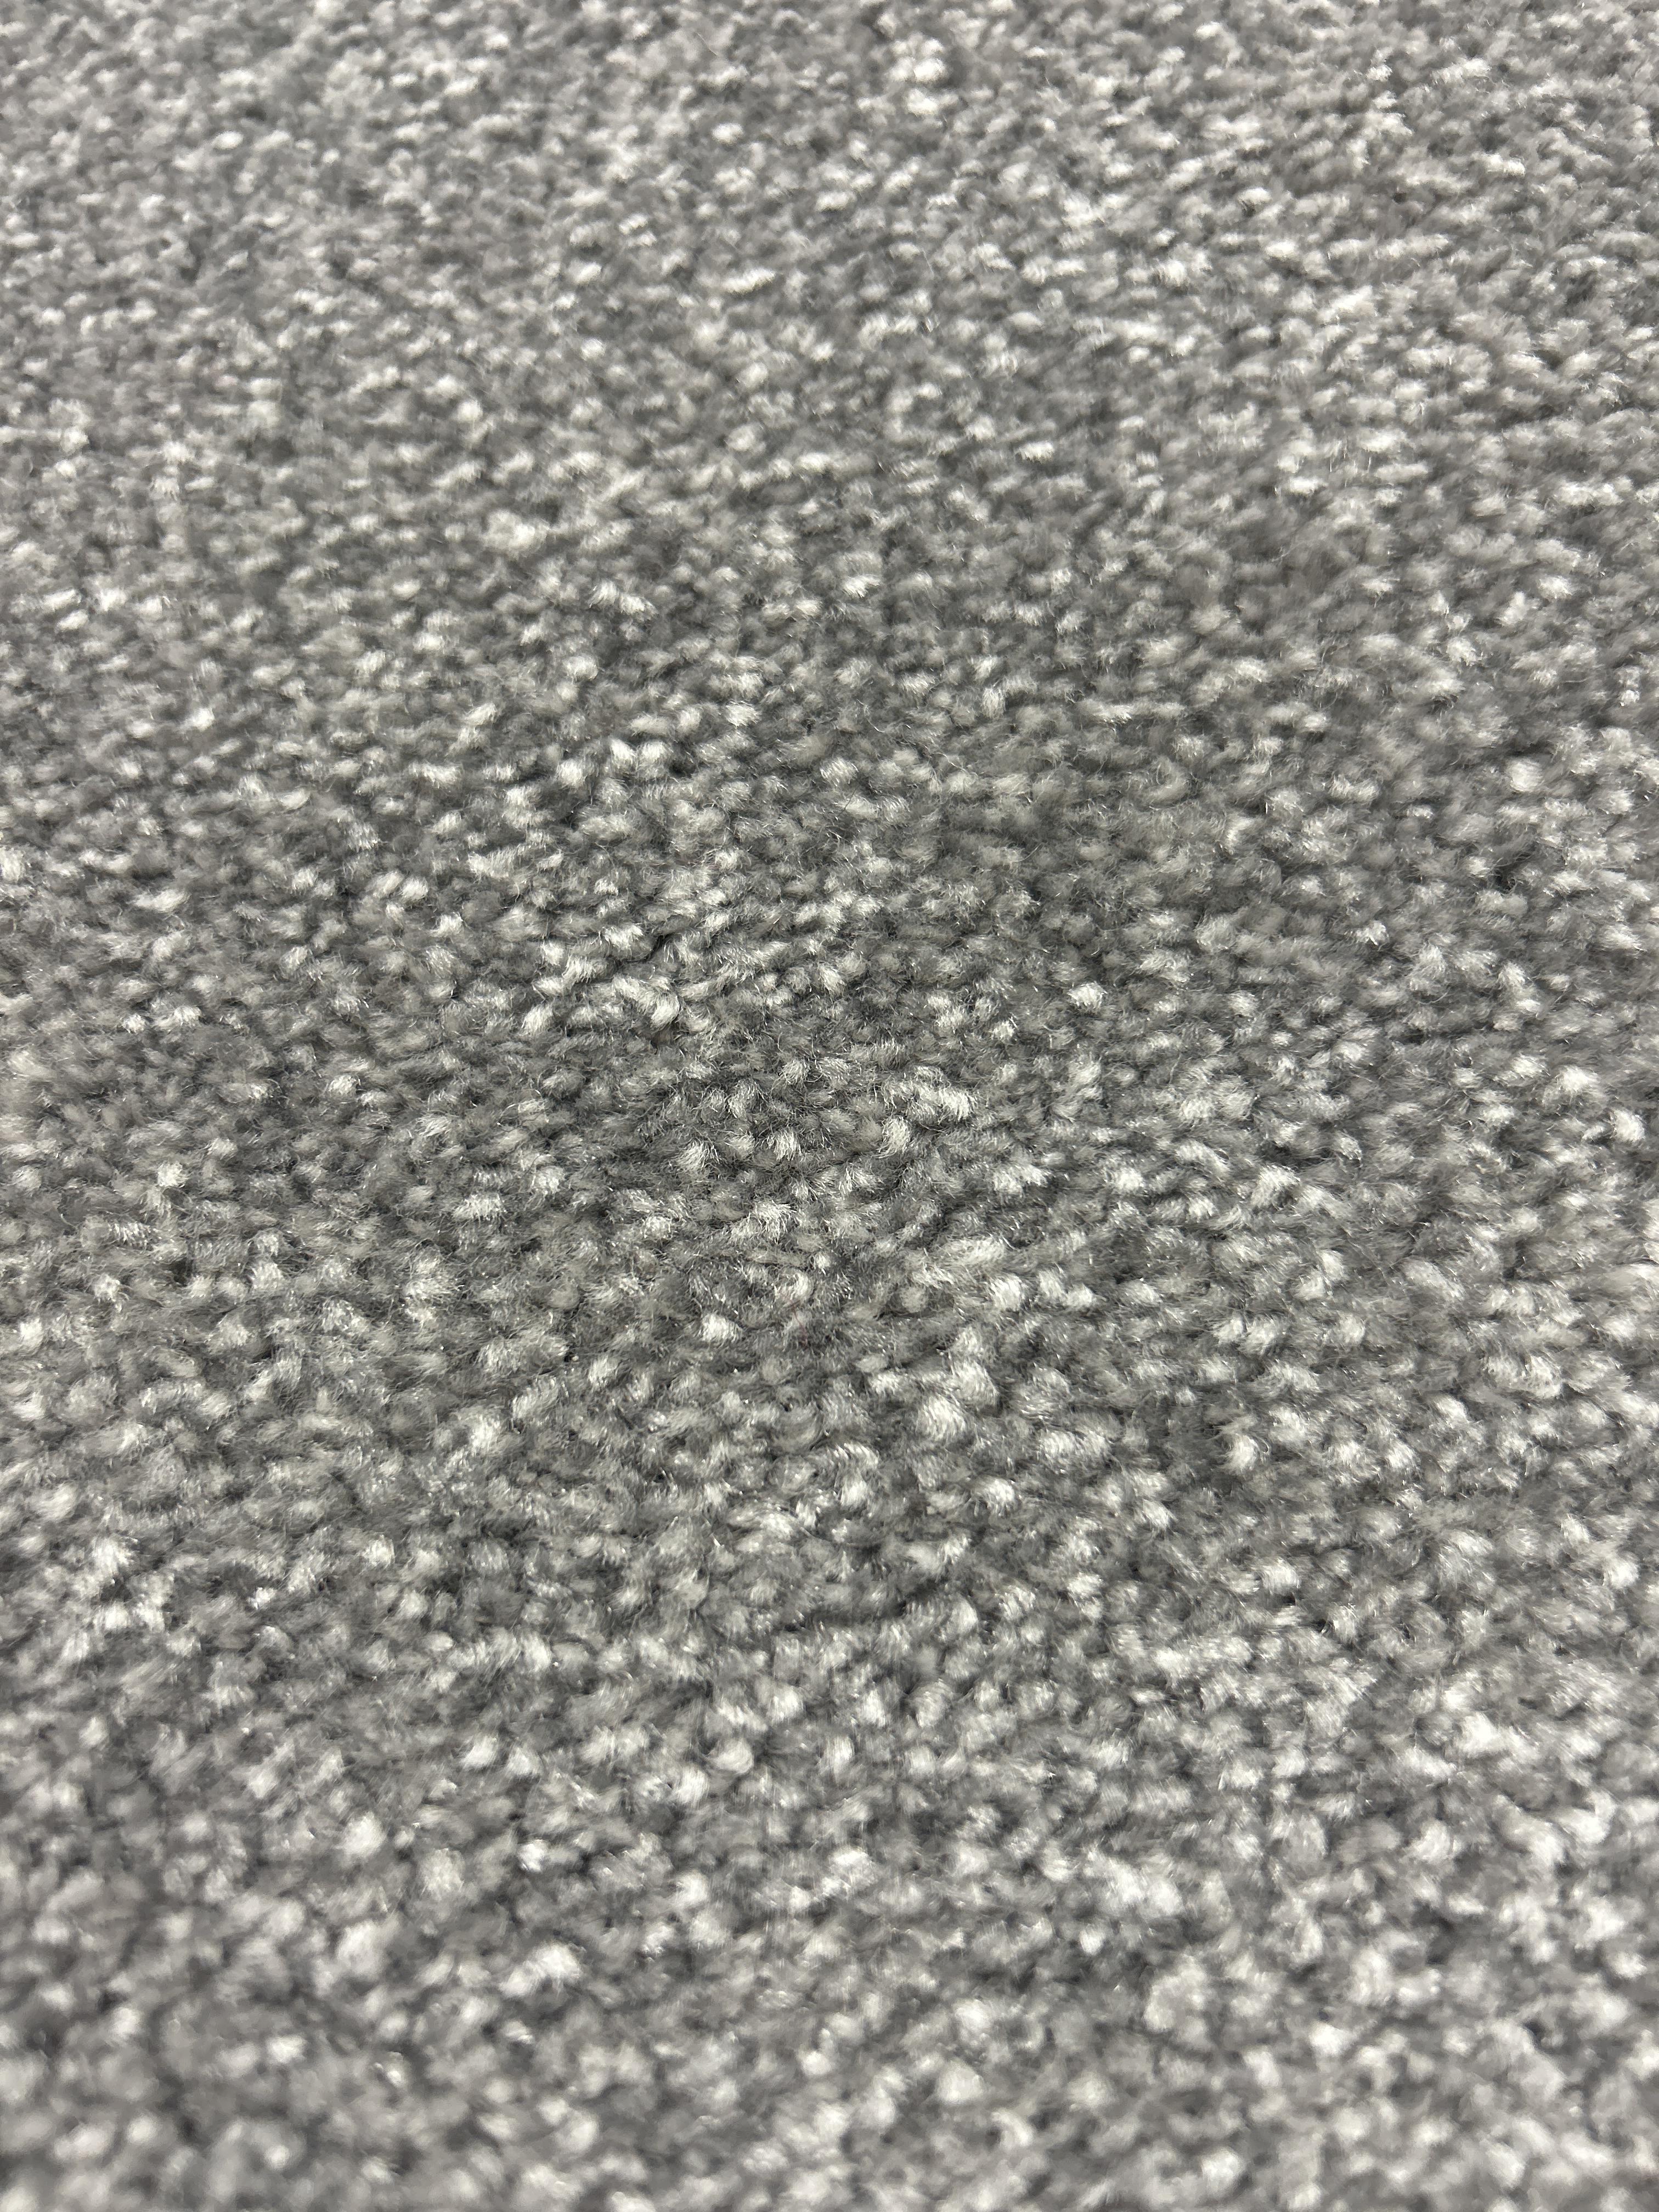 San diego carpet range